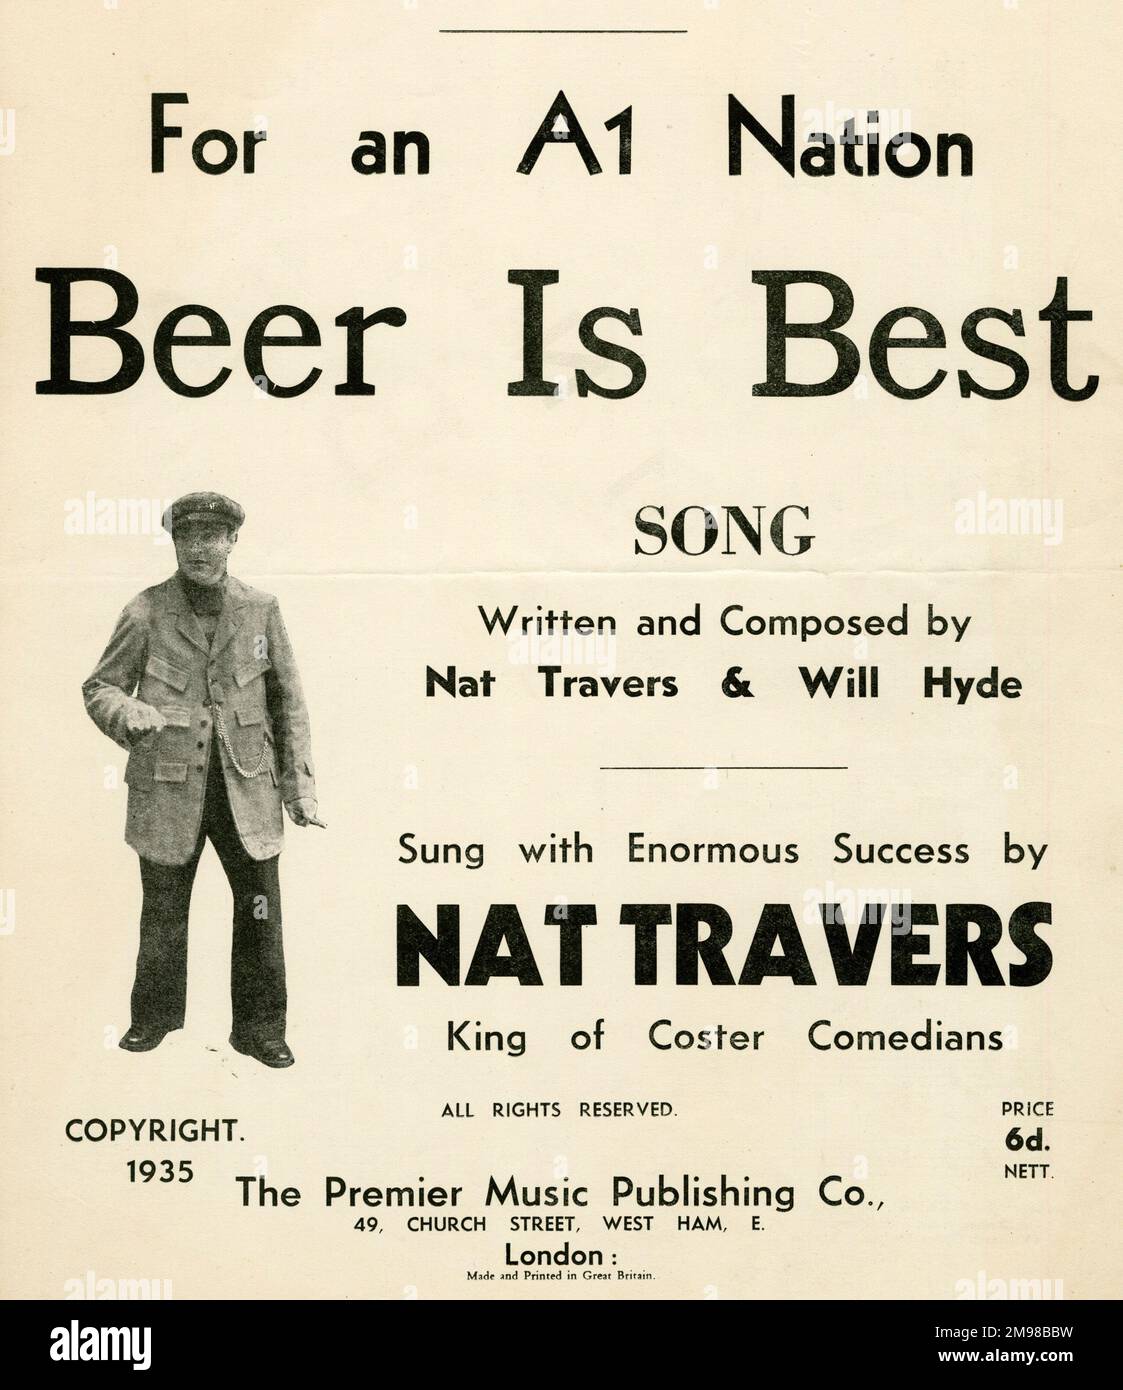 Copertina musicale, per un A1 Nation Beer is Best, parole e musica di Nat Travers e Will Hyde, eseguita da Nat Travers, King of Coster Comedians. Foto Stock